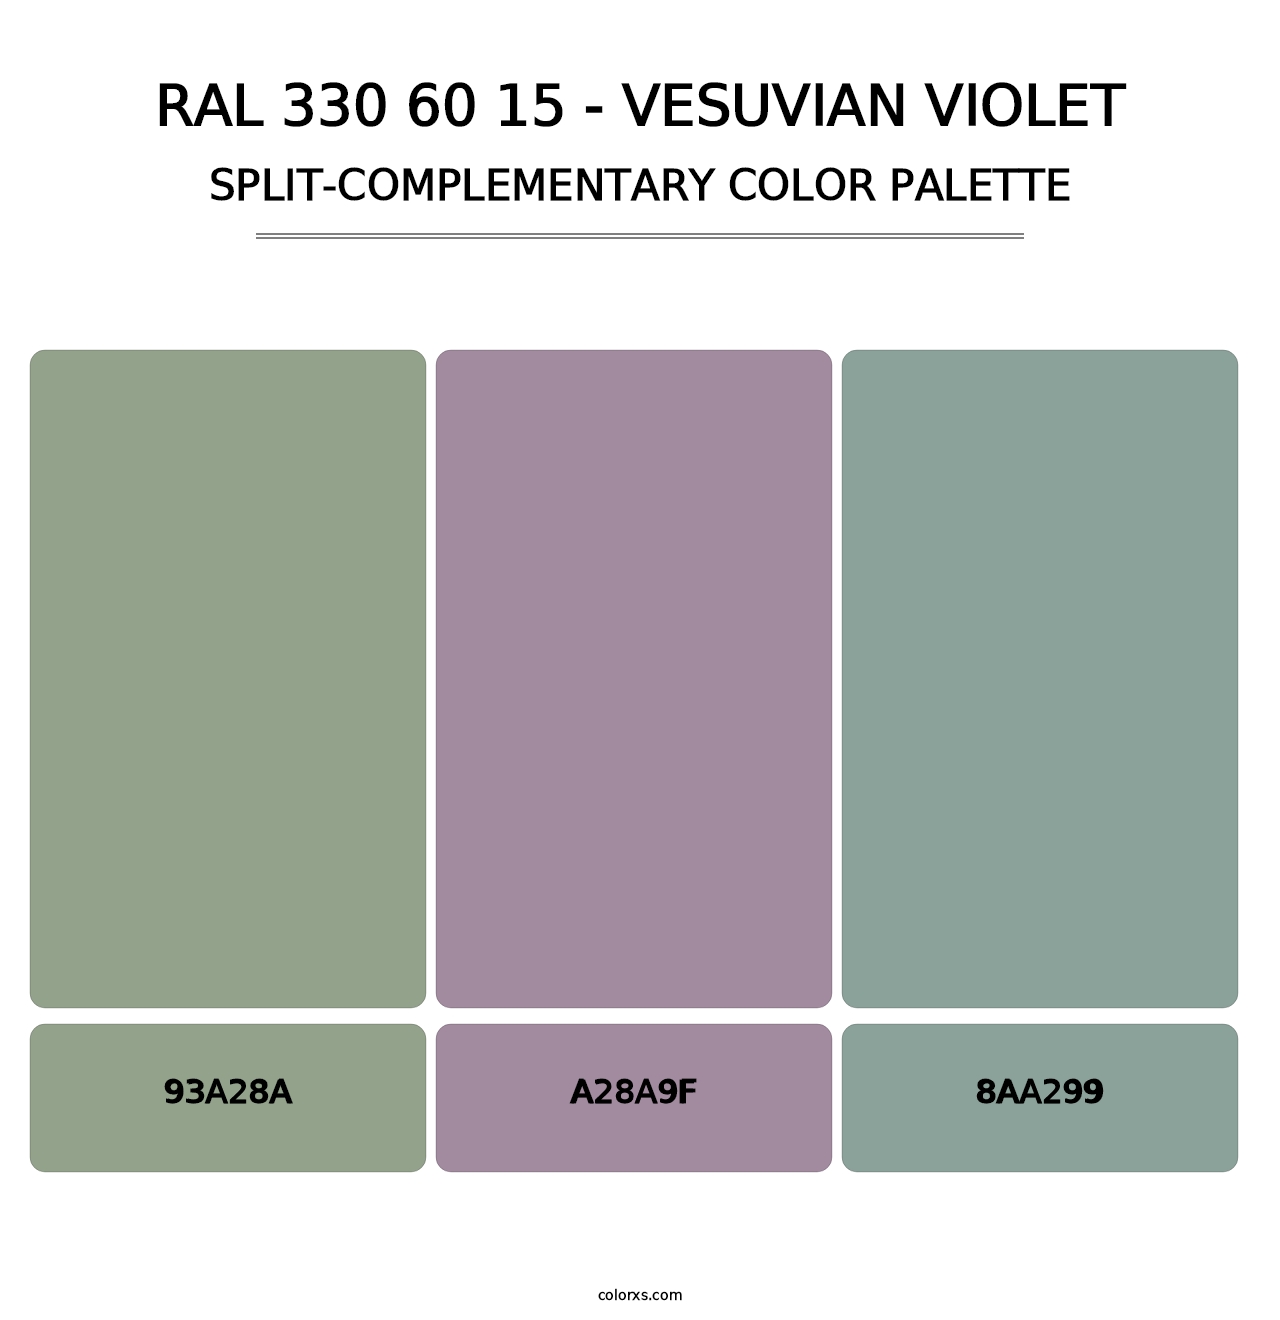 RAL 330 60 15 - Vesuvian Violet - Split-Complementary Color Palette